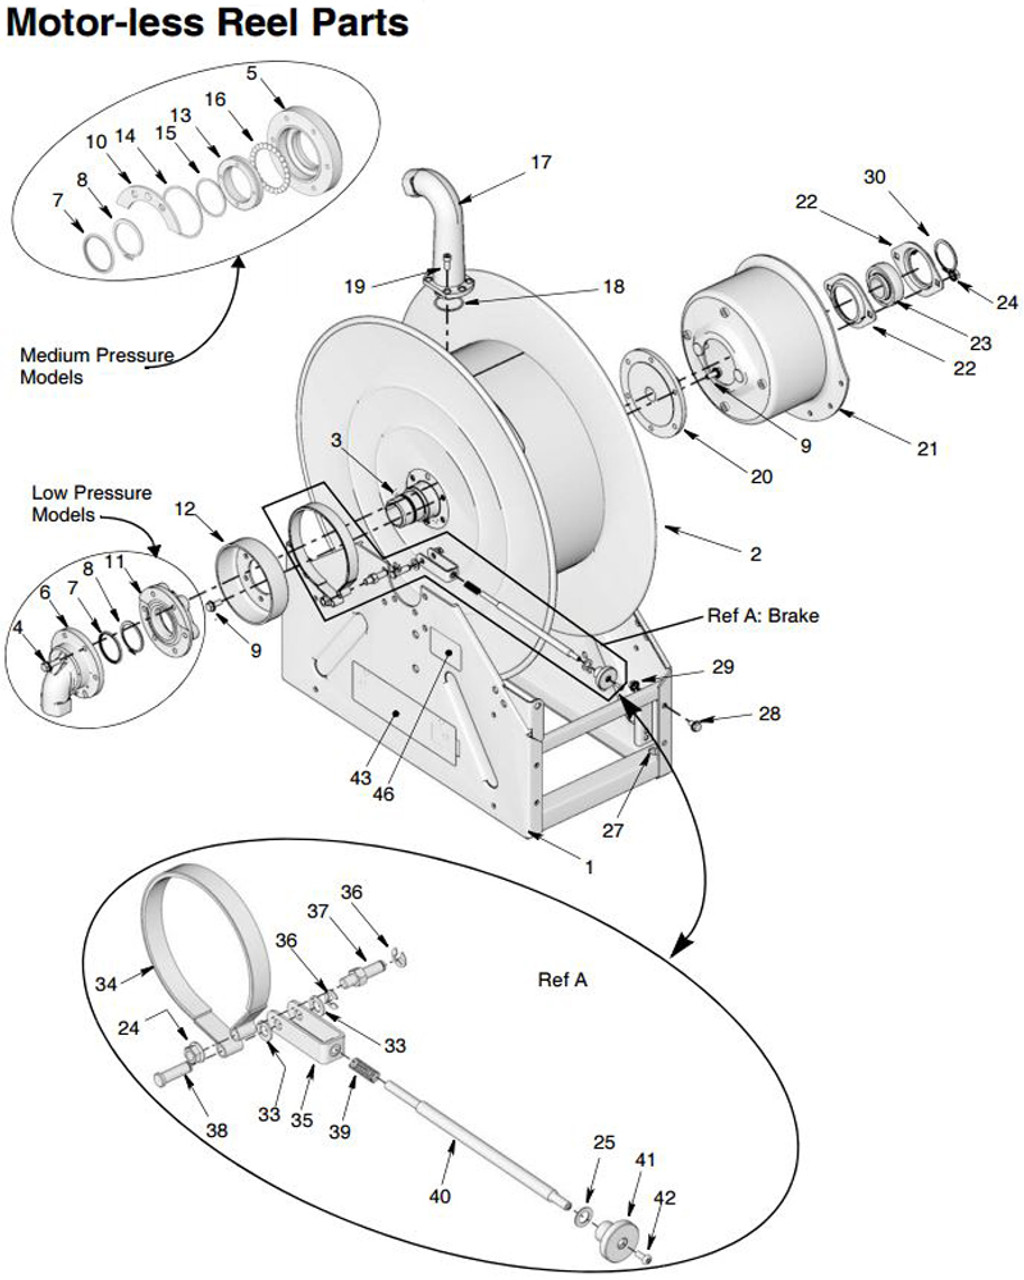 Hose Reel Parts Kit